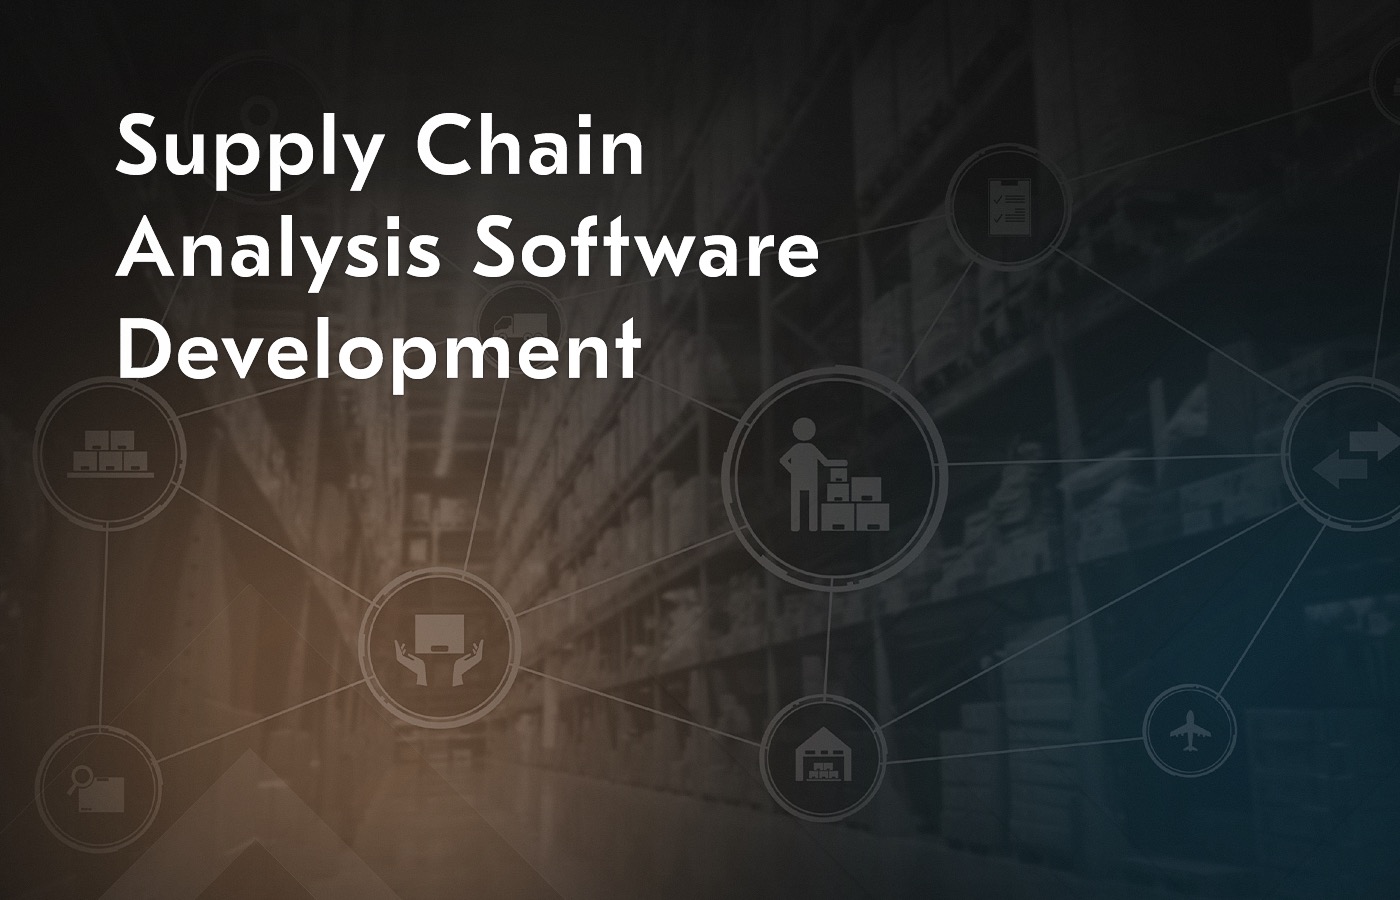 Supply chain analysis software development